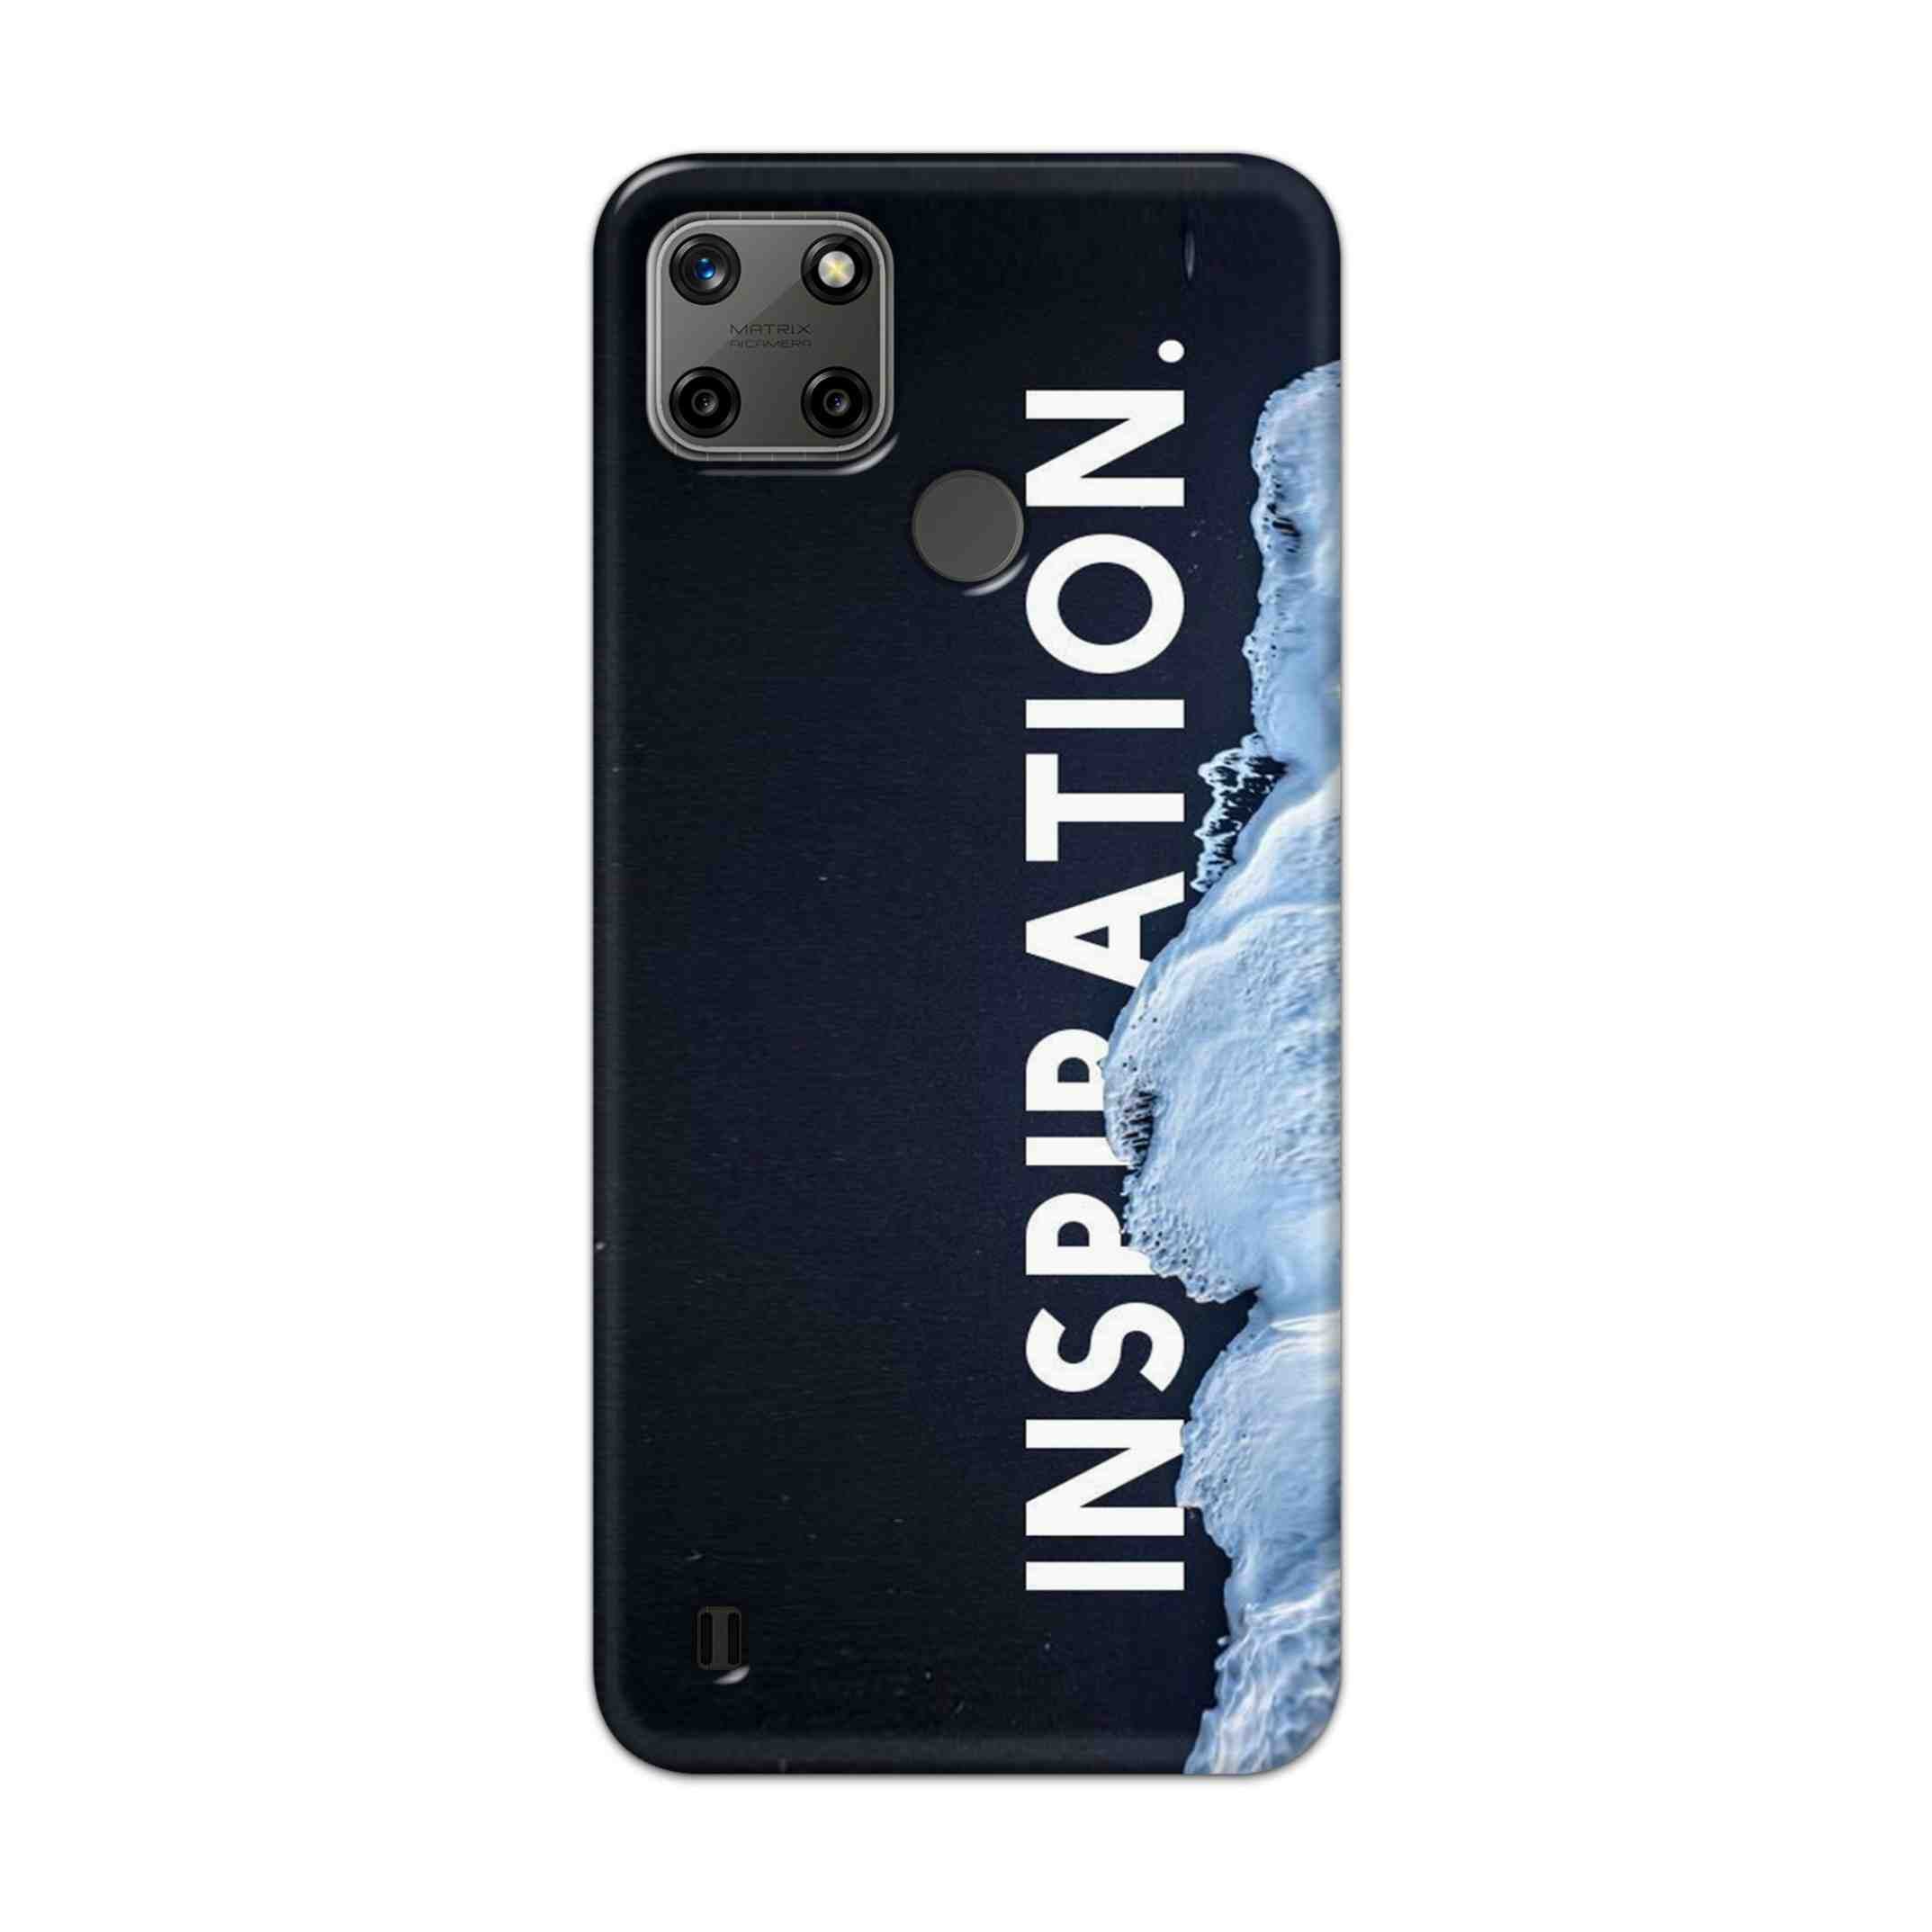 Buy Inspiration Hard Back Mobile Phone Case Cover For Realme C25Y Online